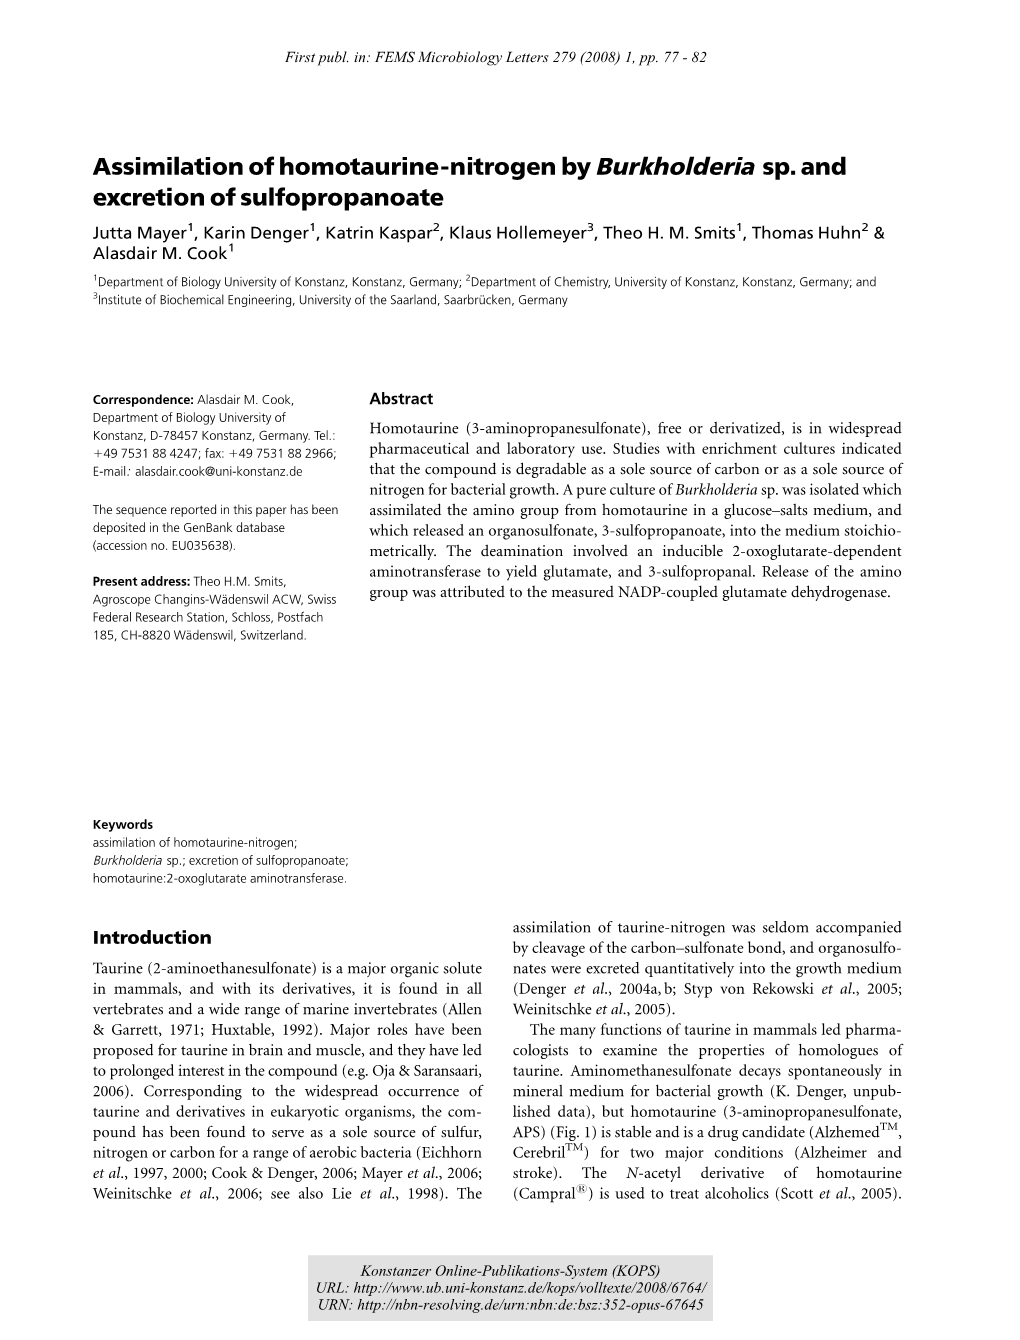 Assimilation of Homotaurine-Nitrogen by Burkholderia Sp. and Excretion of Sulfopropanoate Jutta Mayer1, Karin Denger1, Katrin Kaspar2, Klaus Hollemeyer3, Theo H